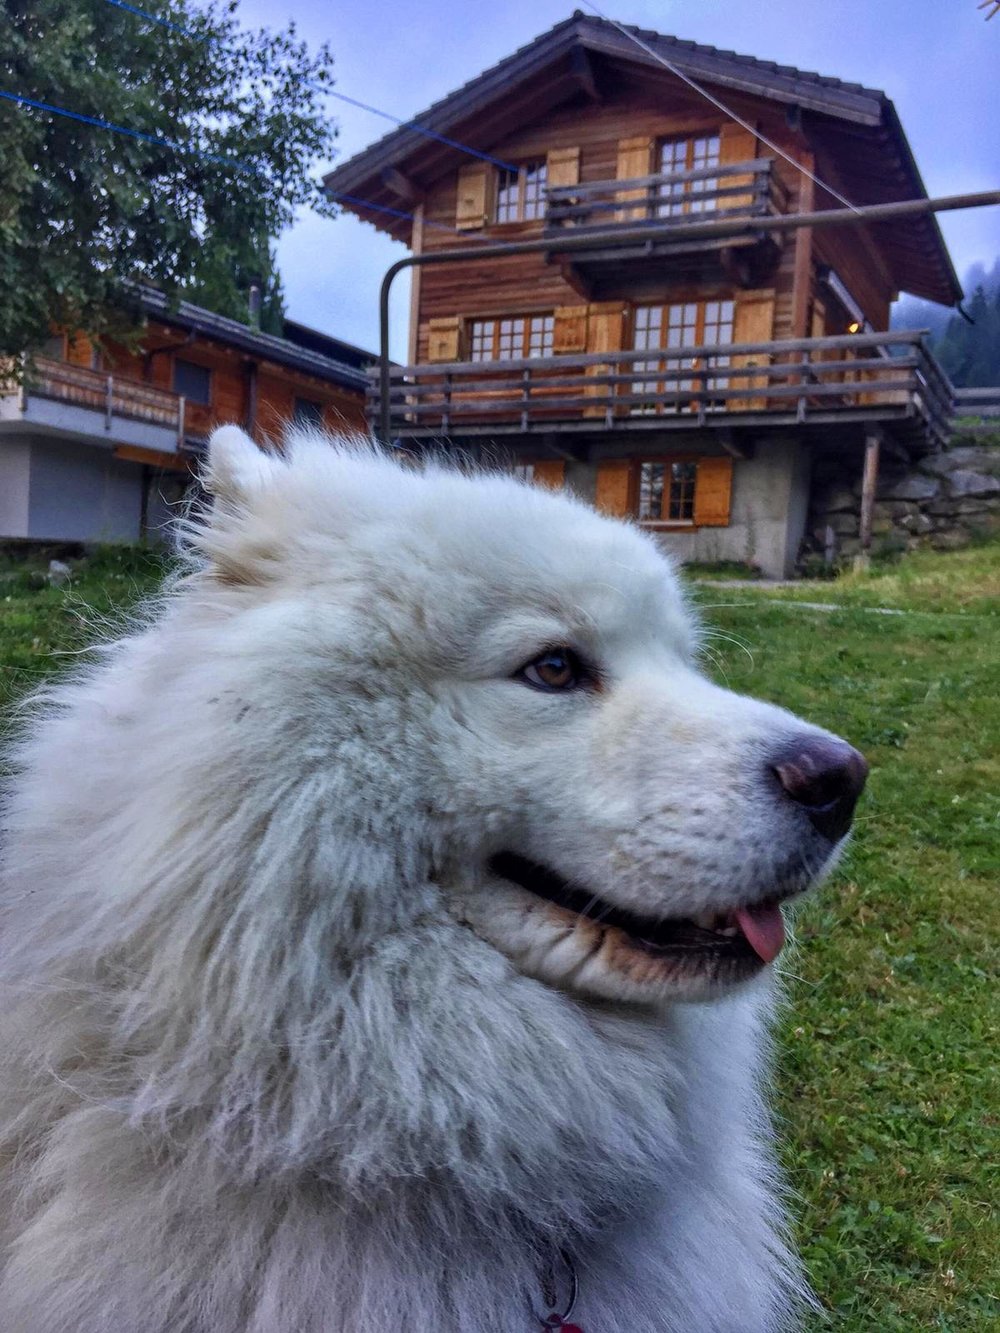  Nanoosh, a furry companion we met in La Fouly, Switzerland.  